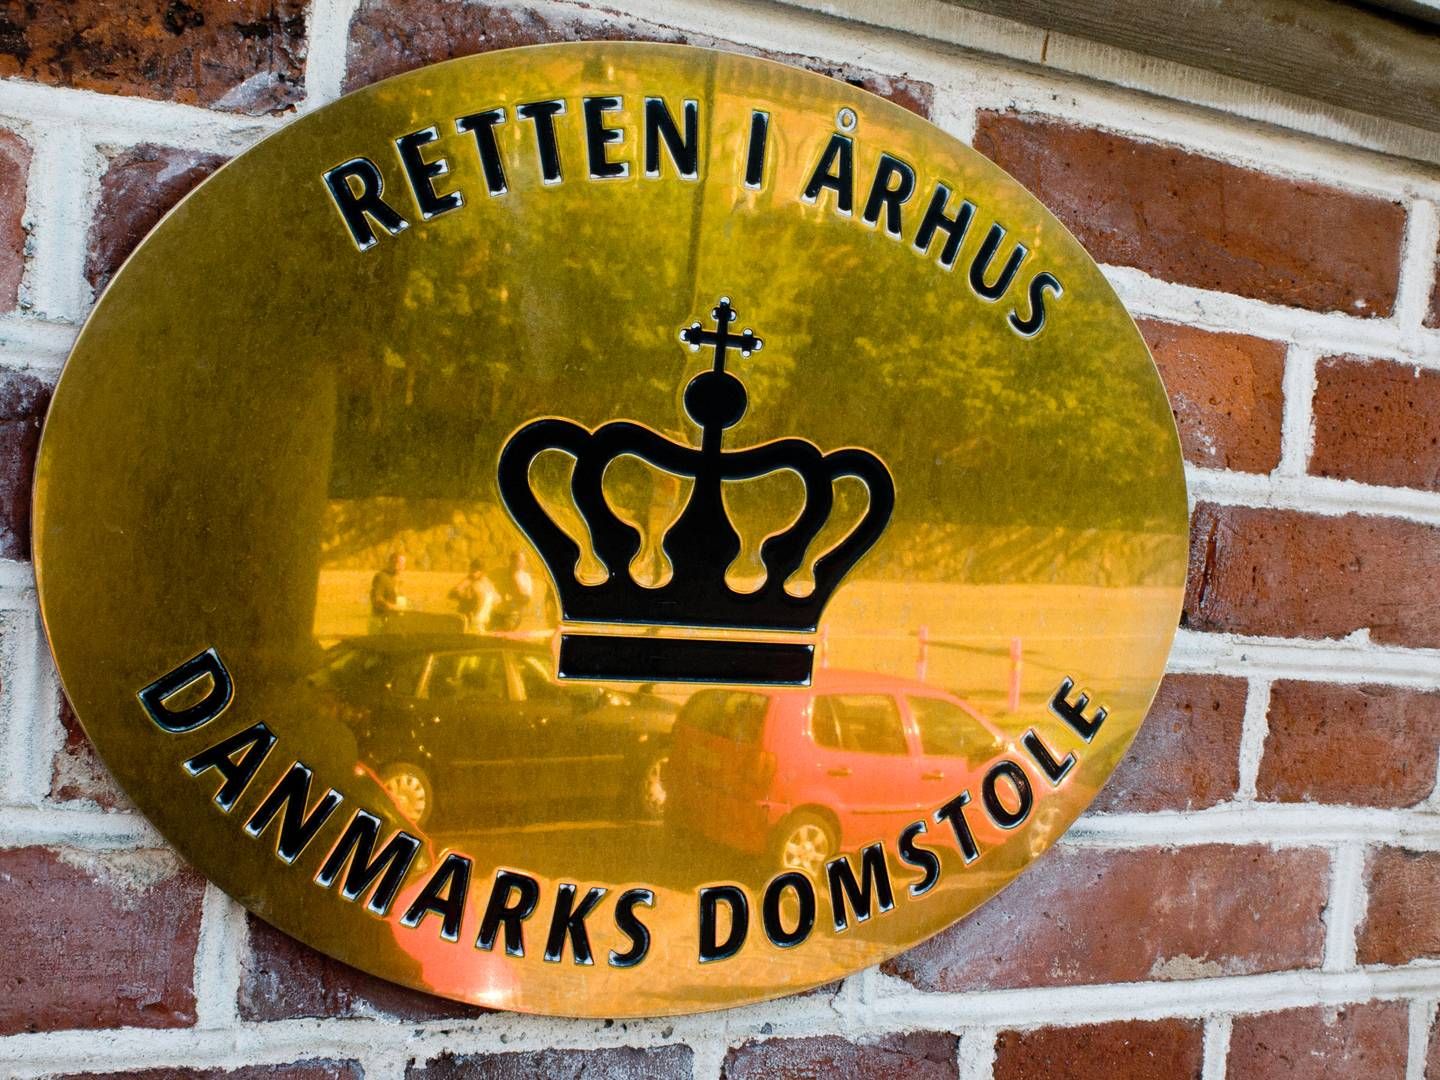 Retten i Aarhus har under coronanedlukningen måttet aflyse 212 straffesager, mens det samtidig er strømmet ind med nye sager. | Foto: Cathrine Kjærø Ulf Ertmann/JPA